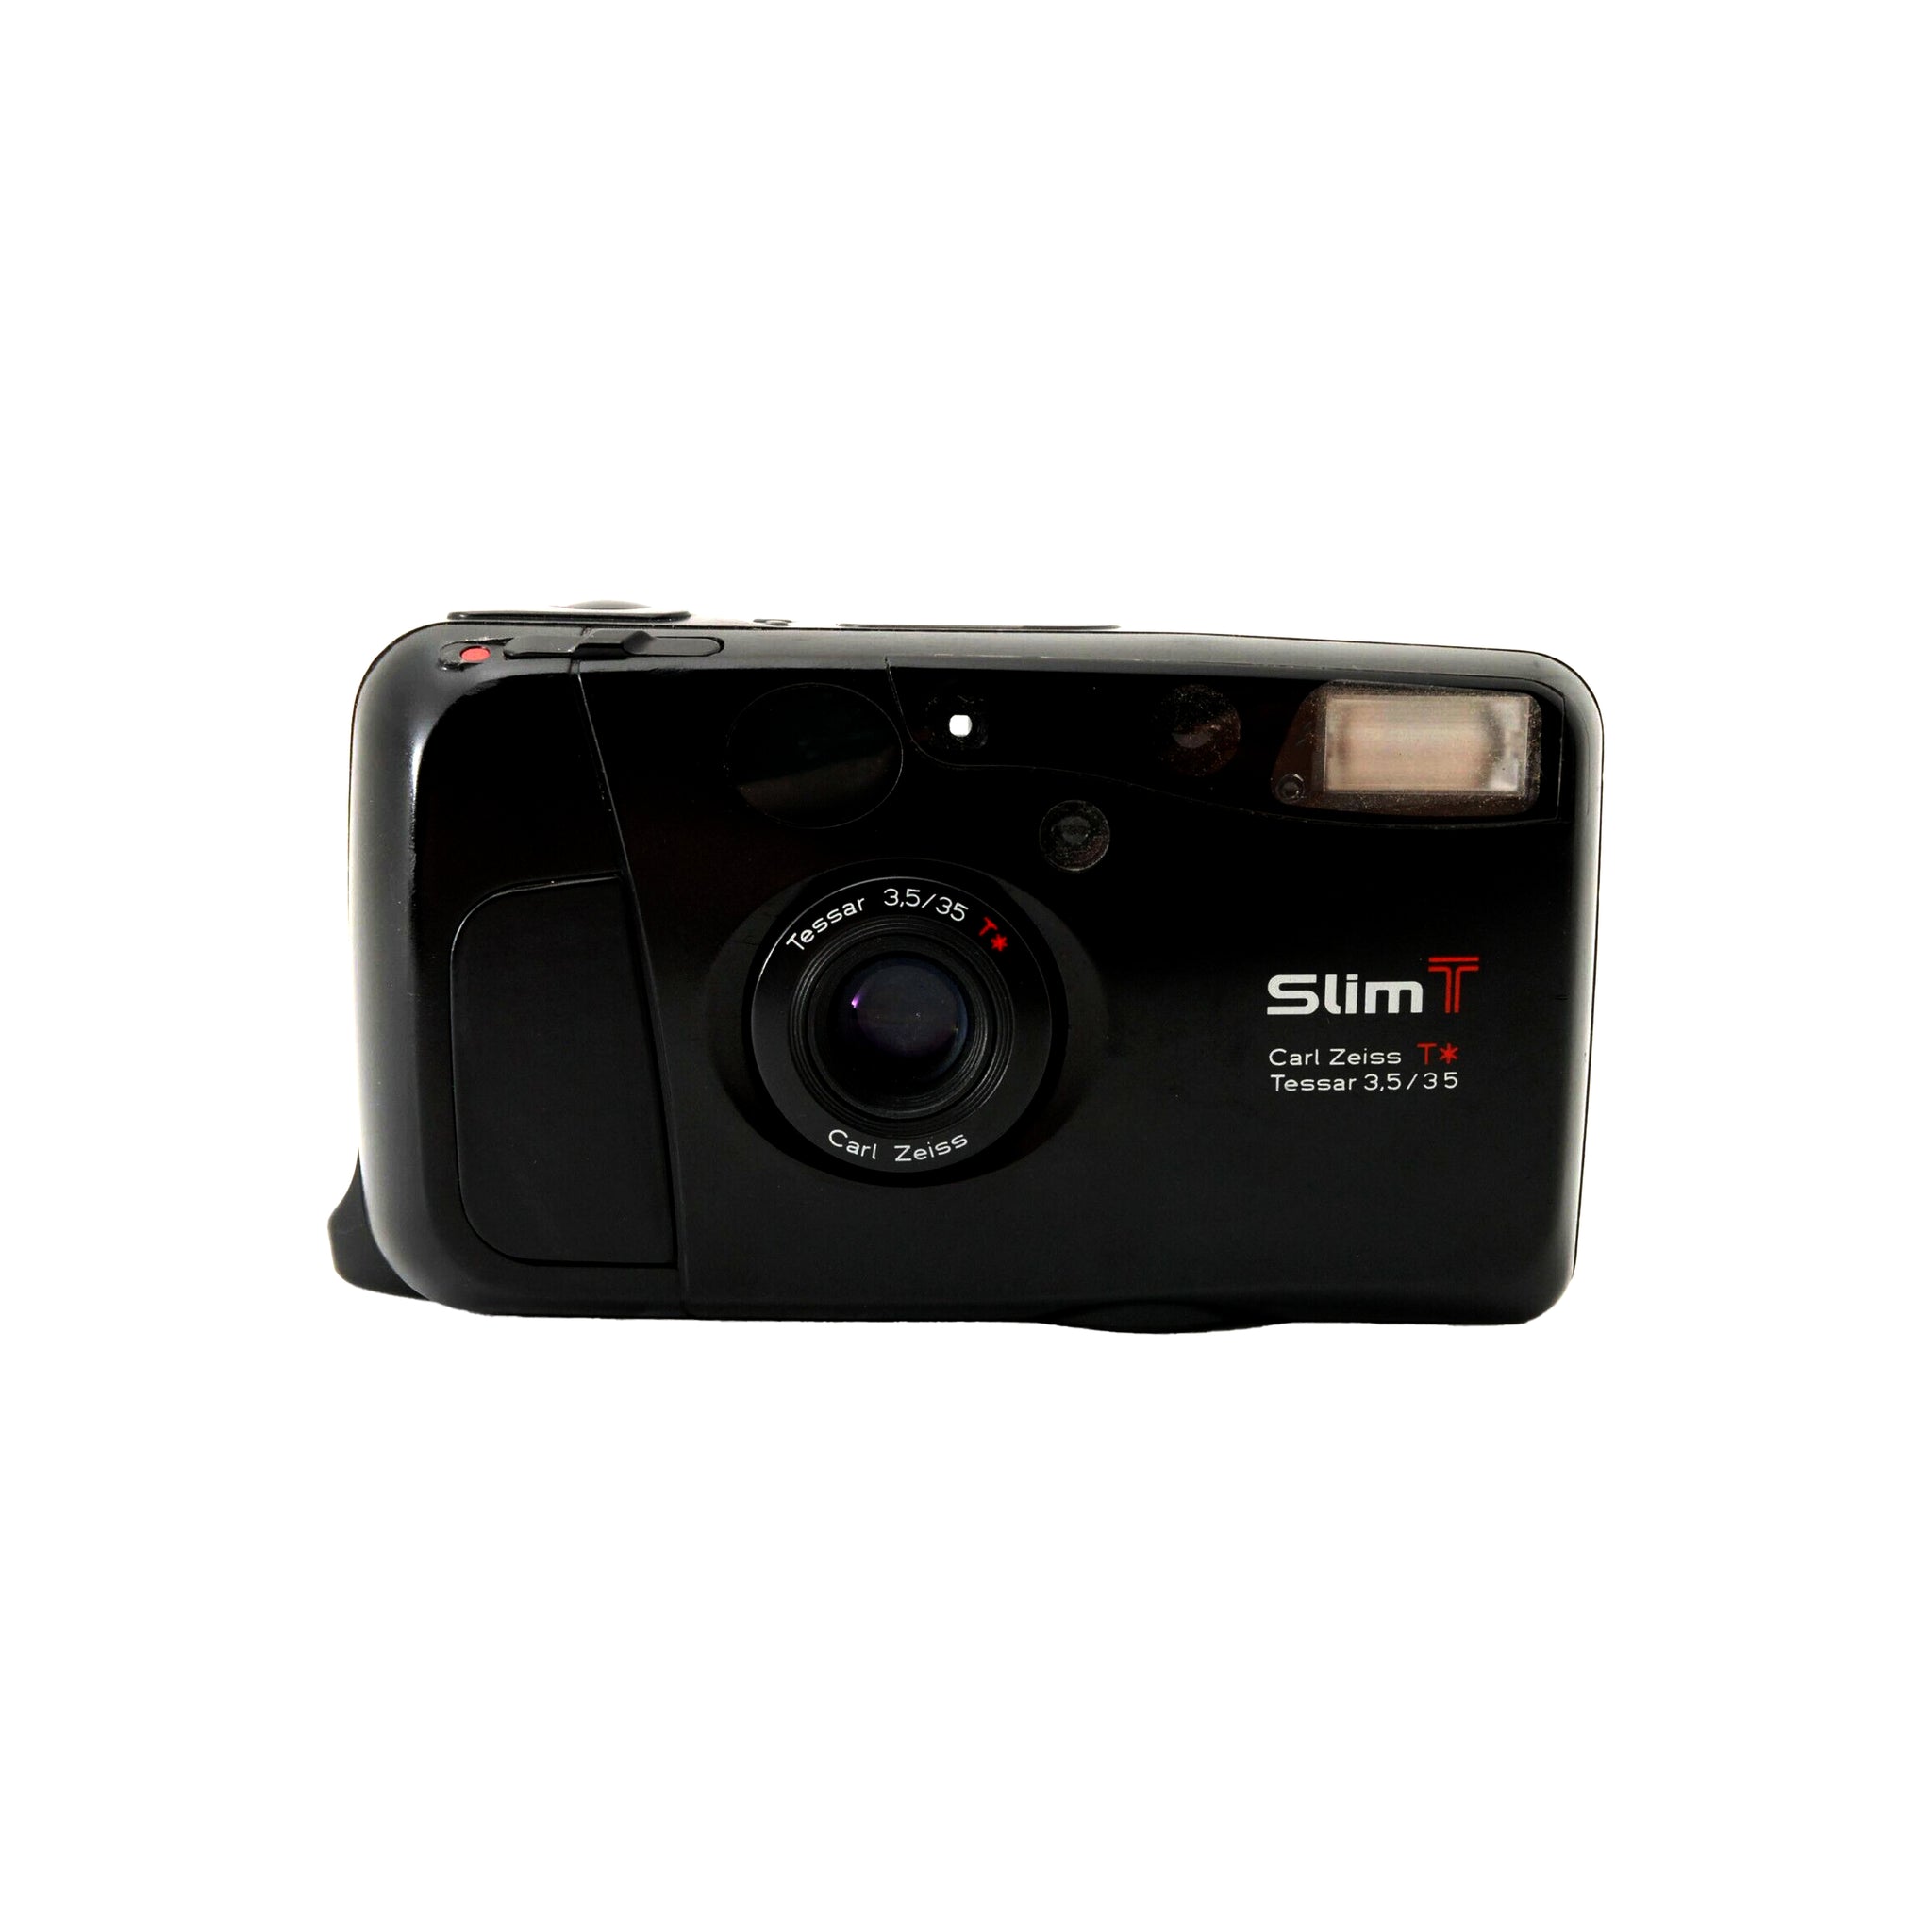 Yashica Slim T – Qualite Camera